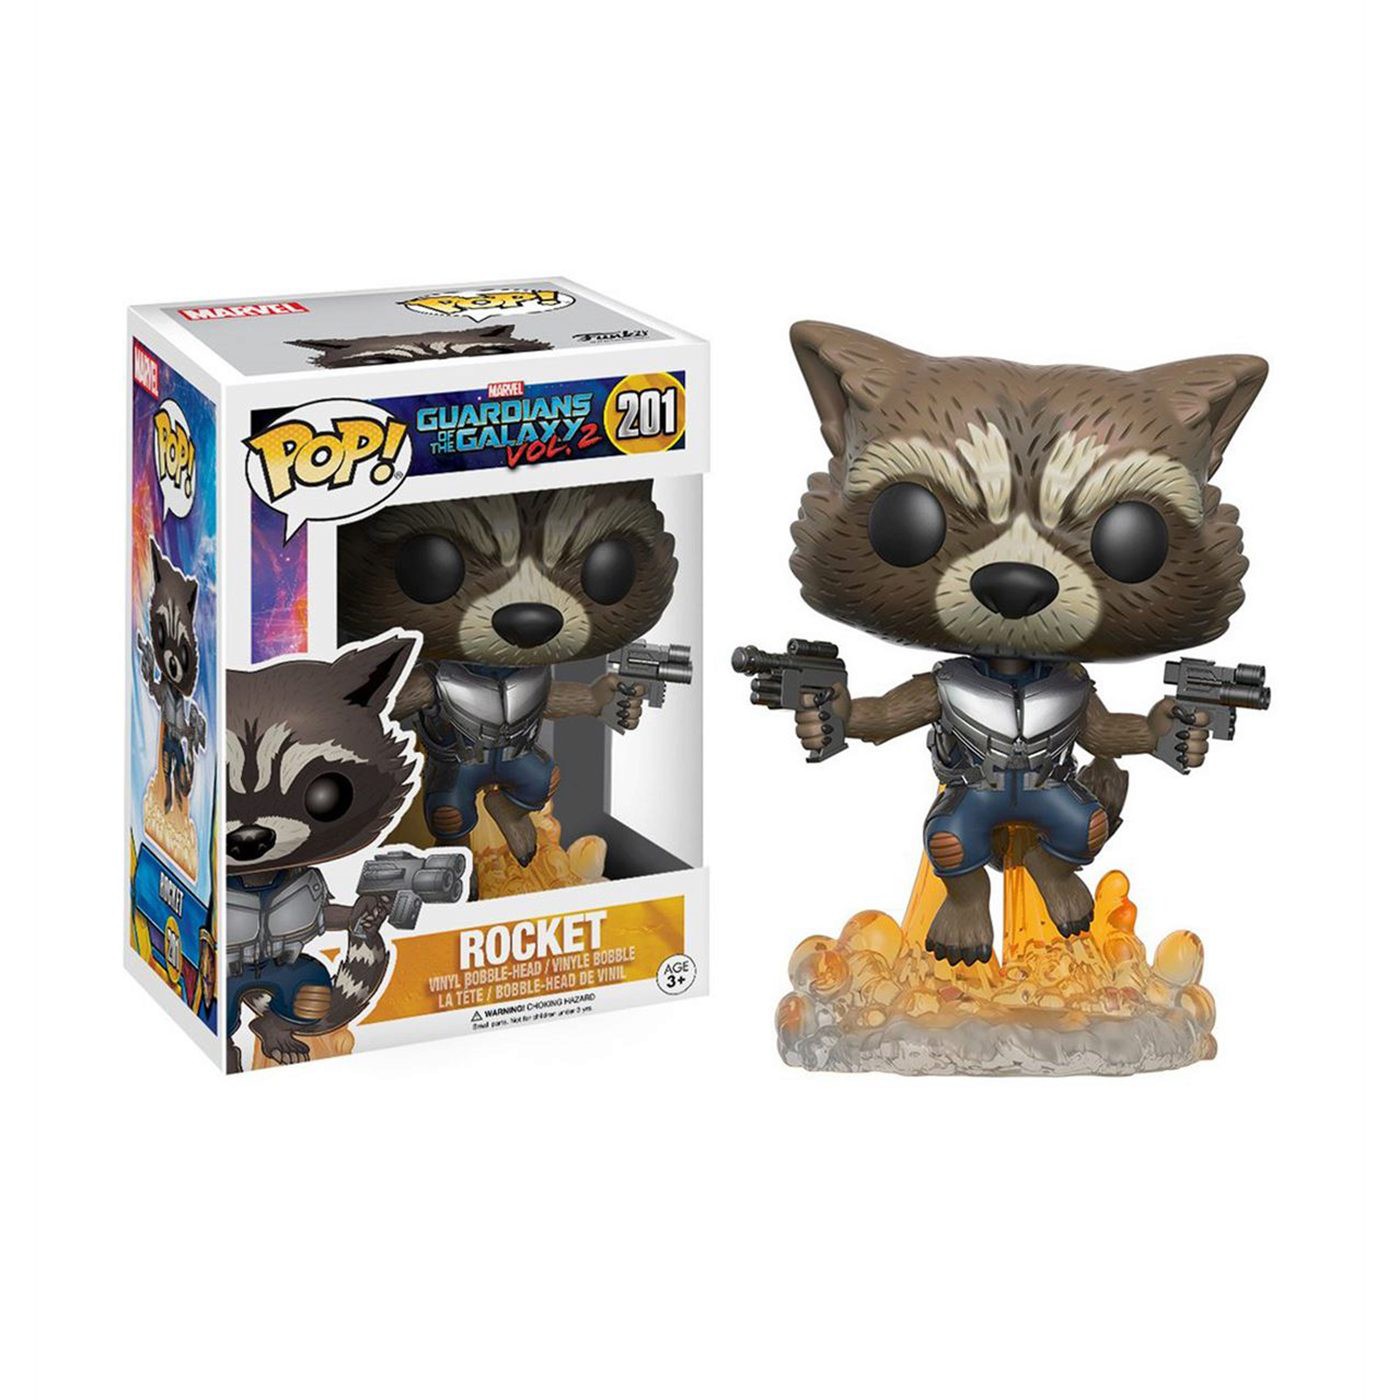 GOTG Vol. 2 Rocket Raccoon Funko Pop Bobble Head